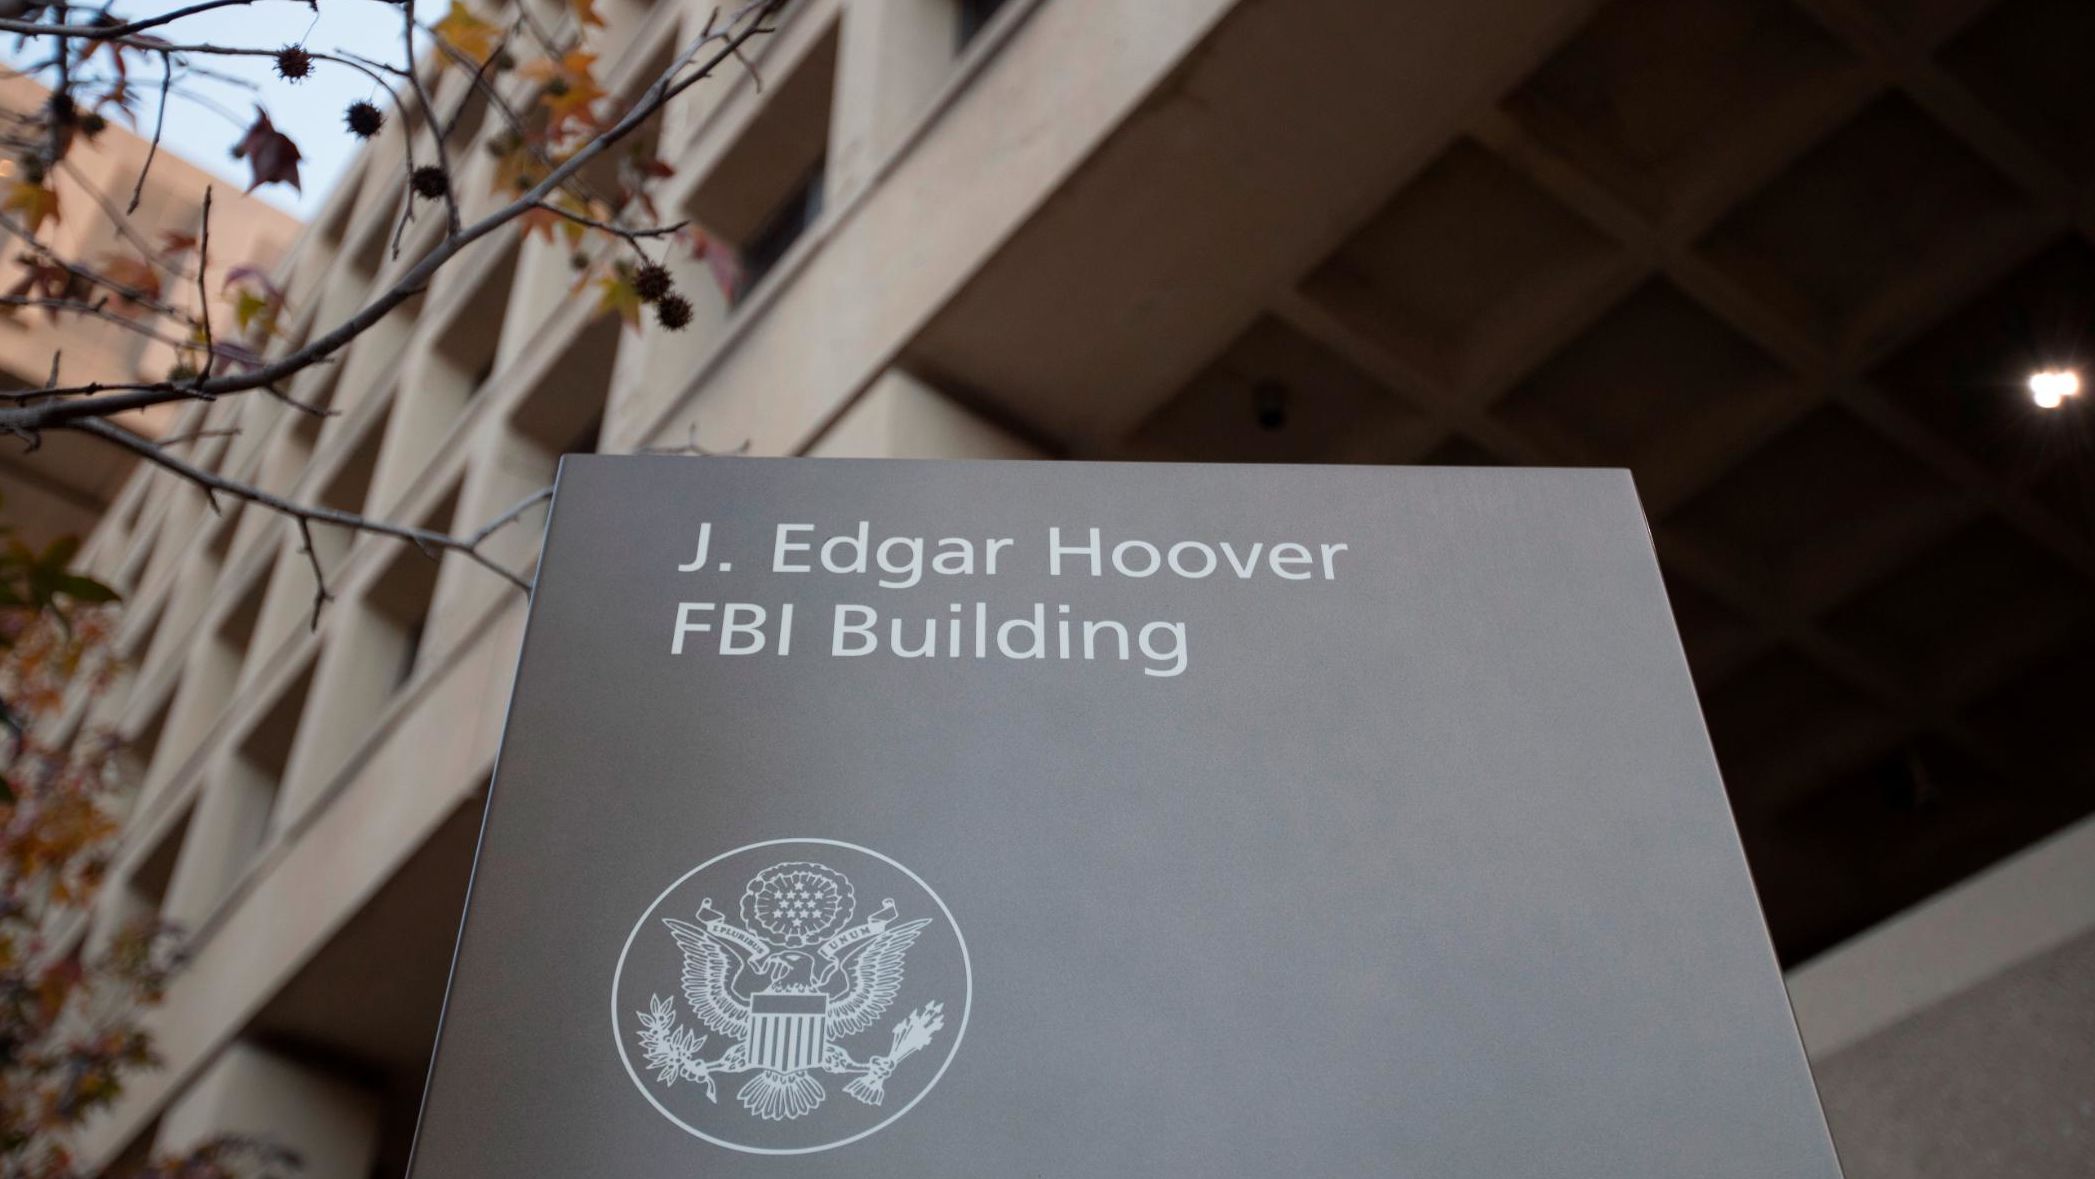 J edgar hoover fbi building FILE